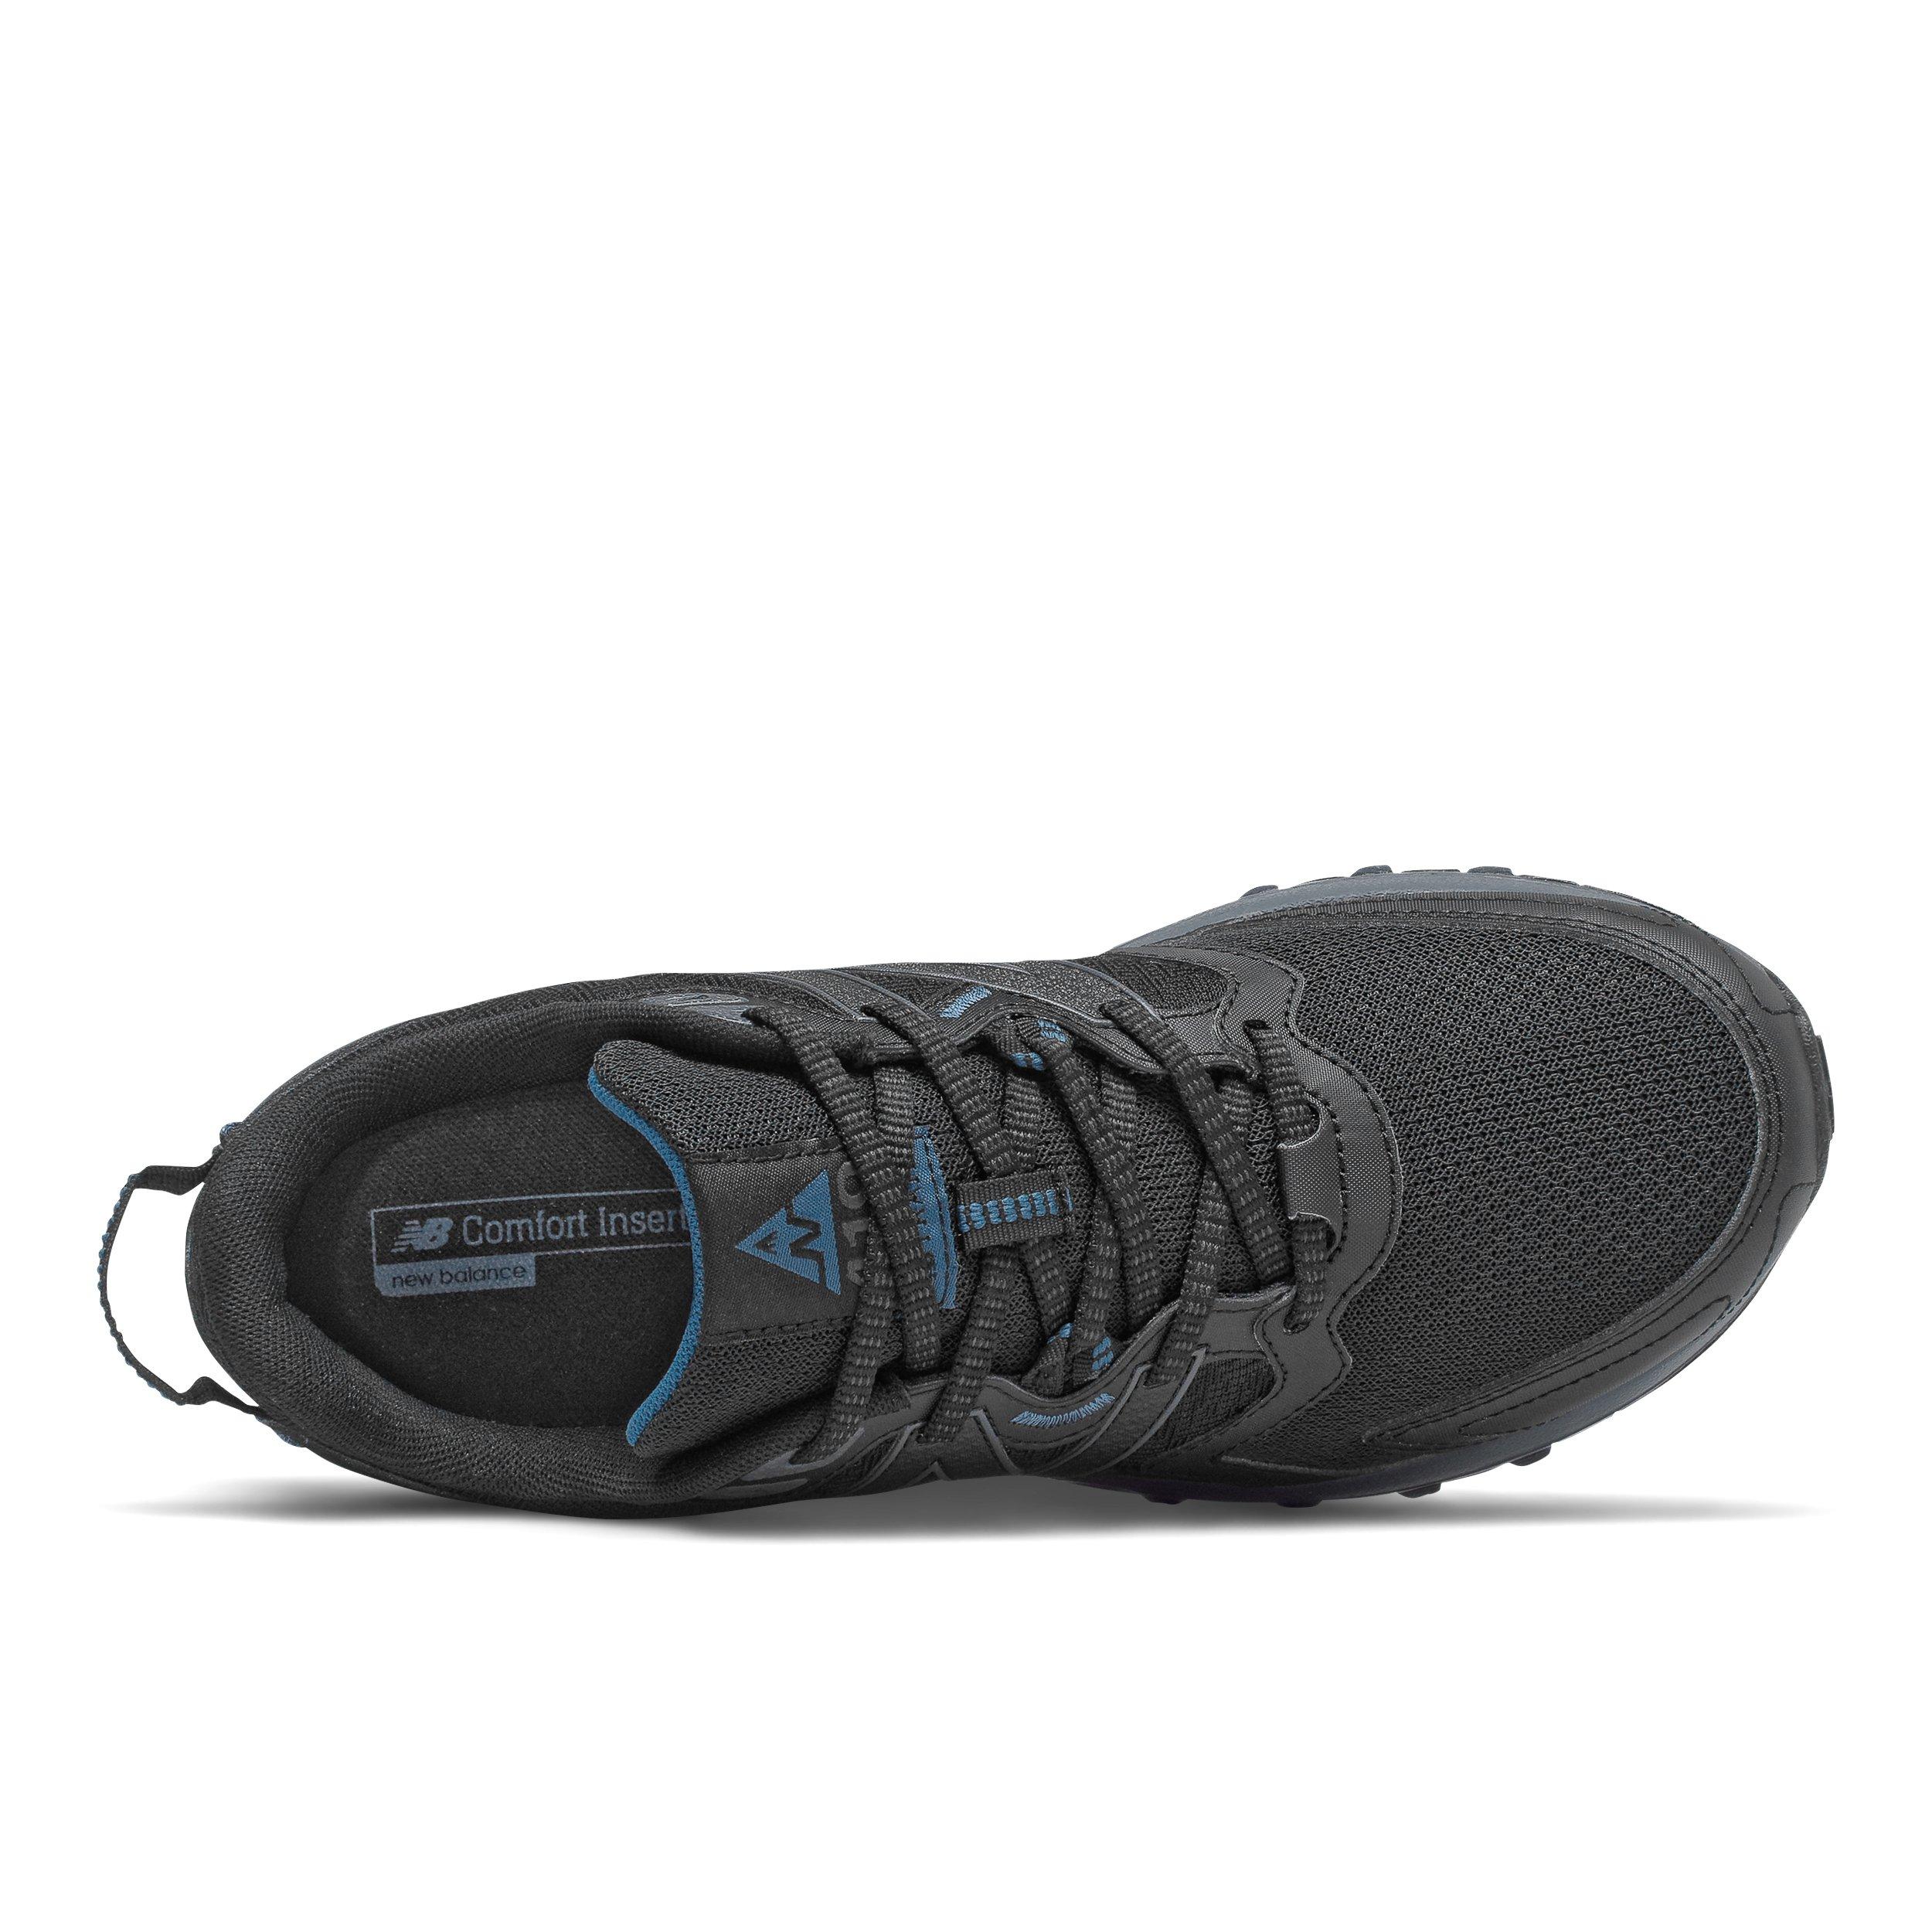 Típico Peatonal de múltiples fines New Balance 410 V7 "Black/Blue" Men's Running Shoe